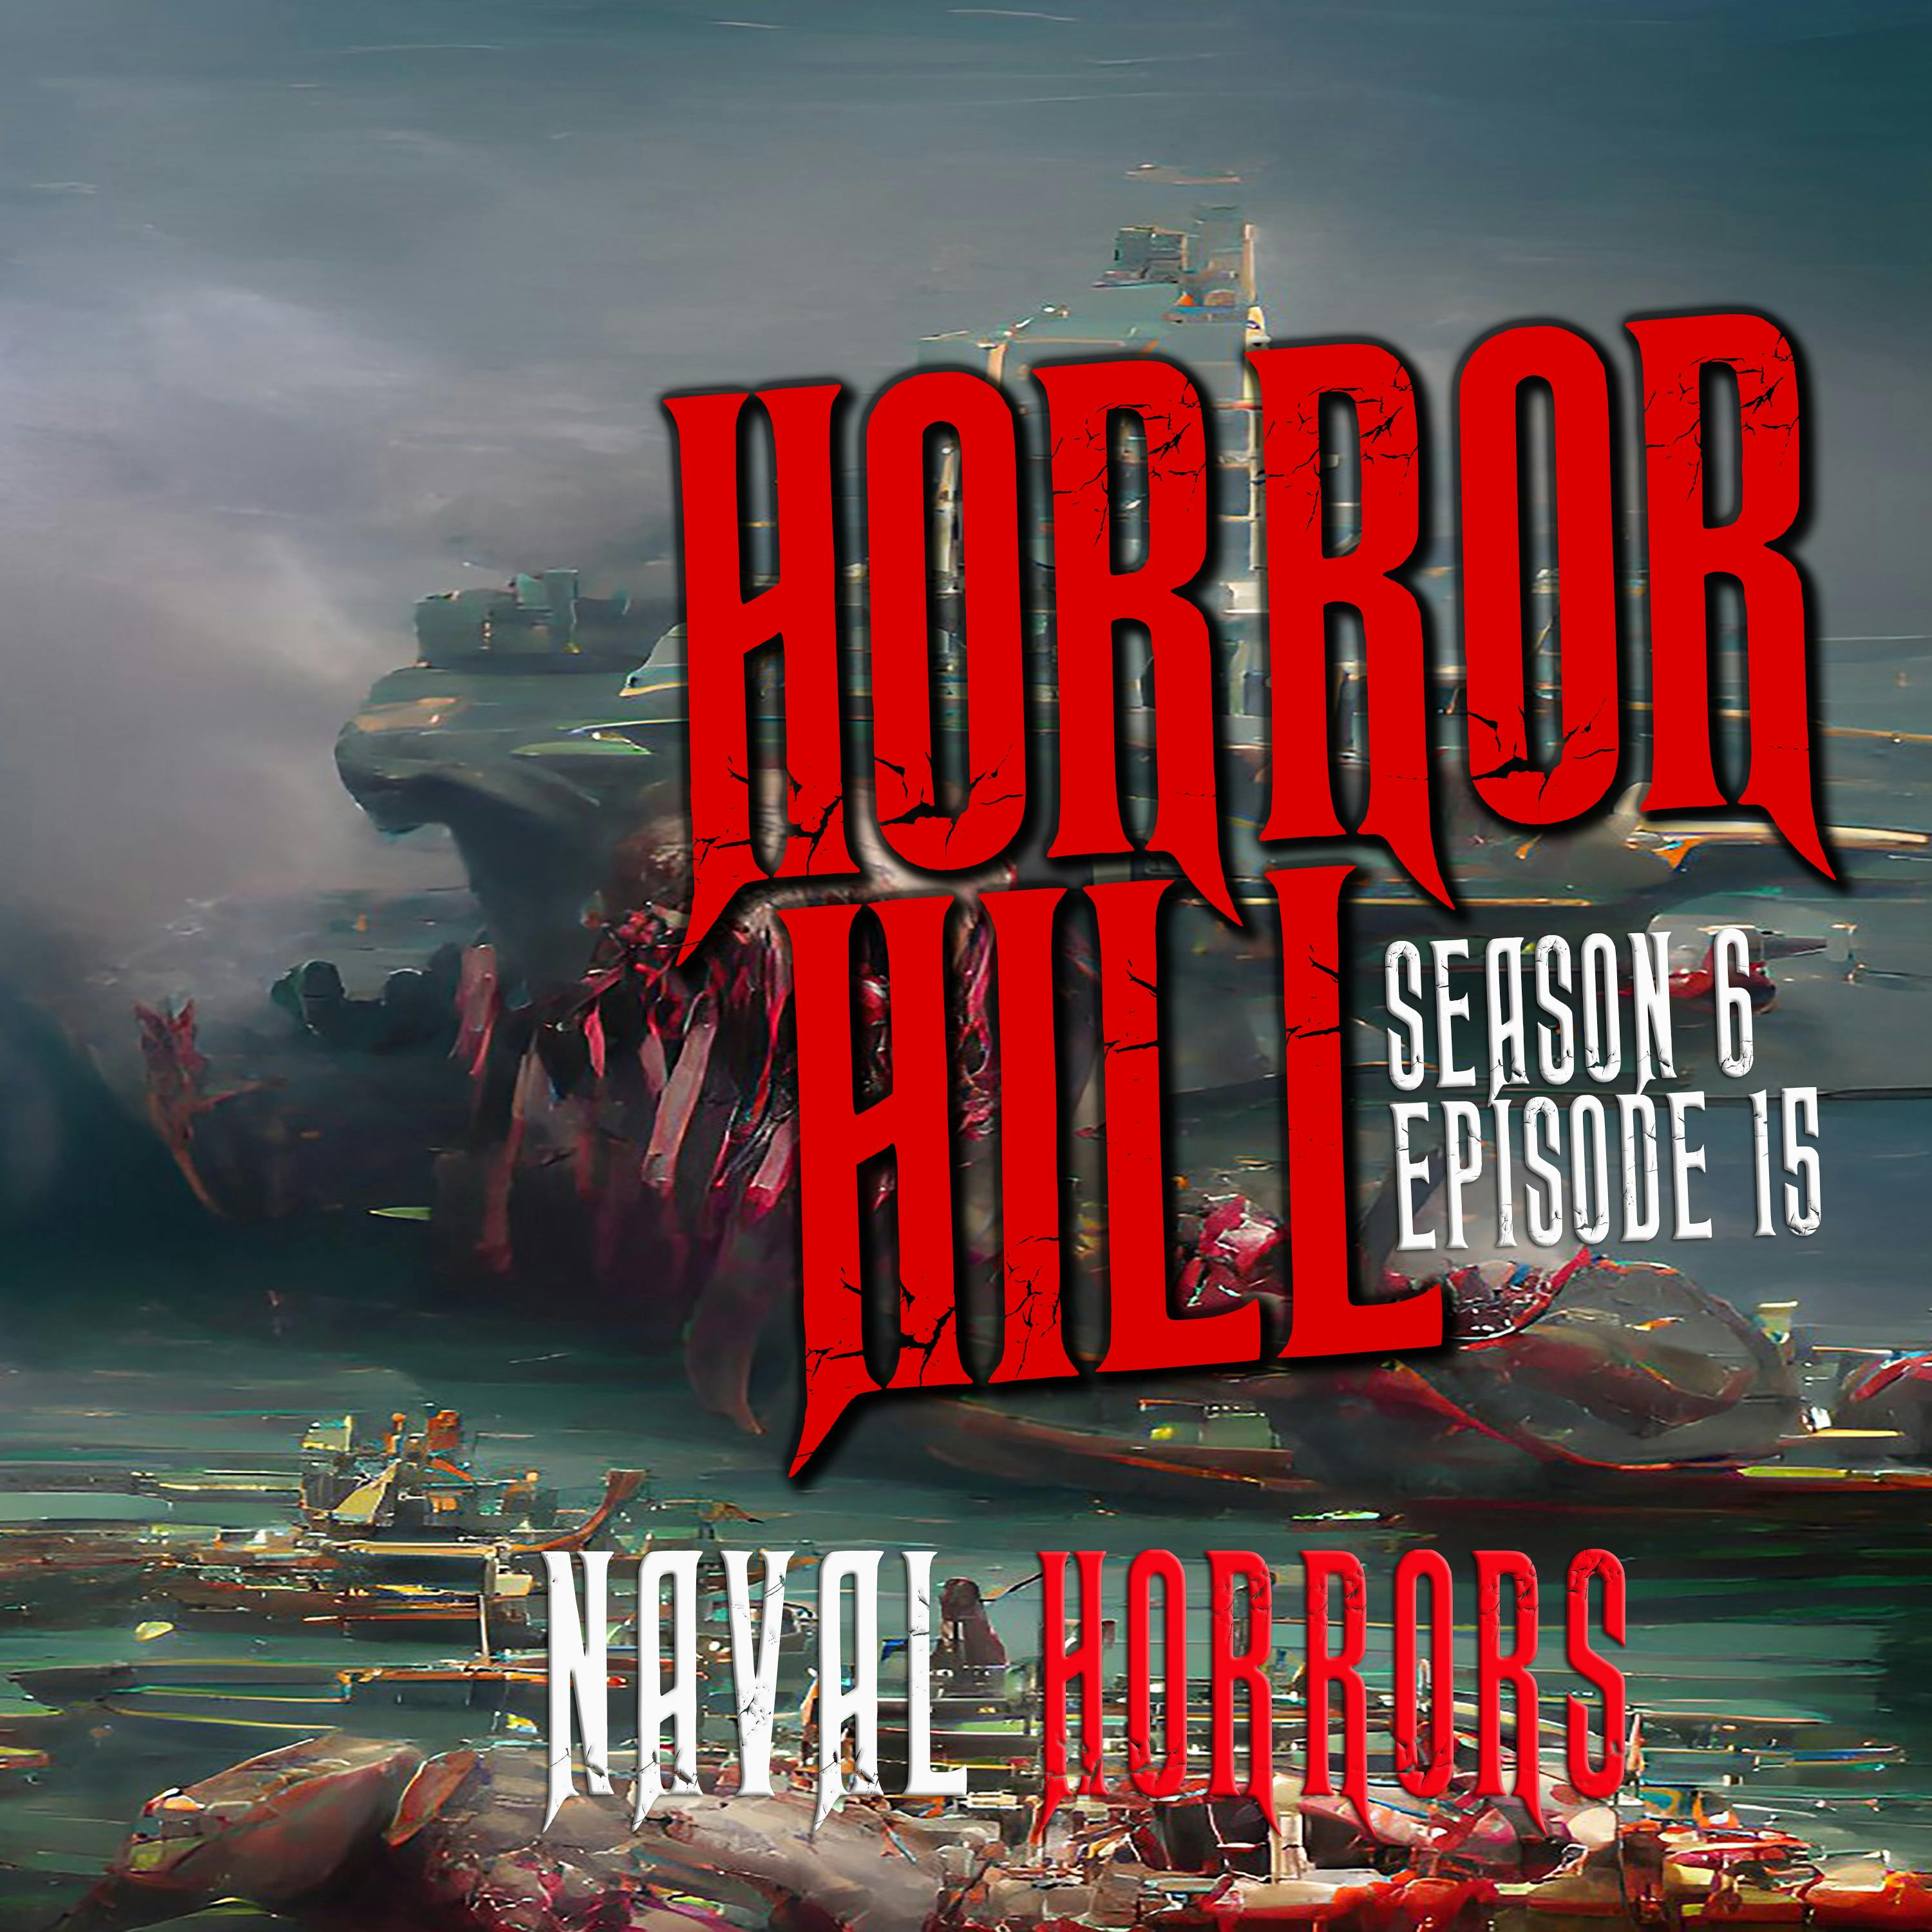 S6E015 - "Naval Horrors" - Horror Hill